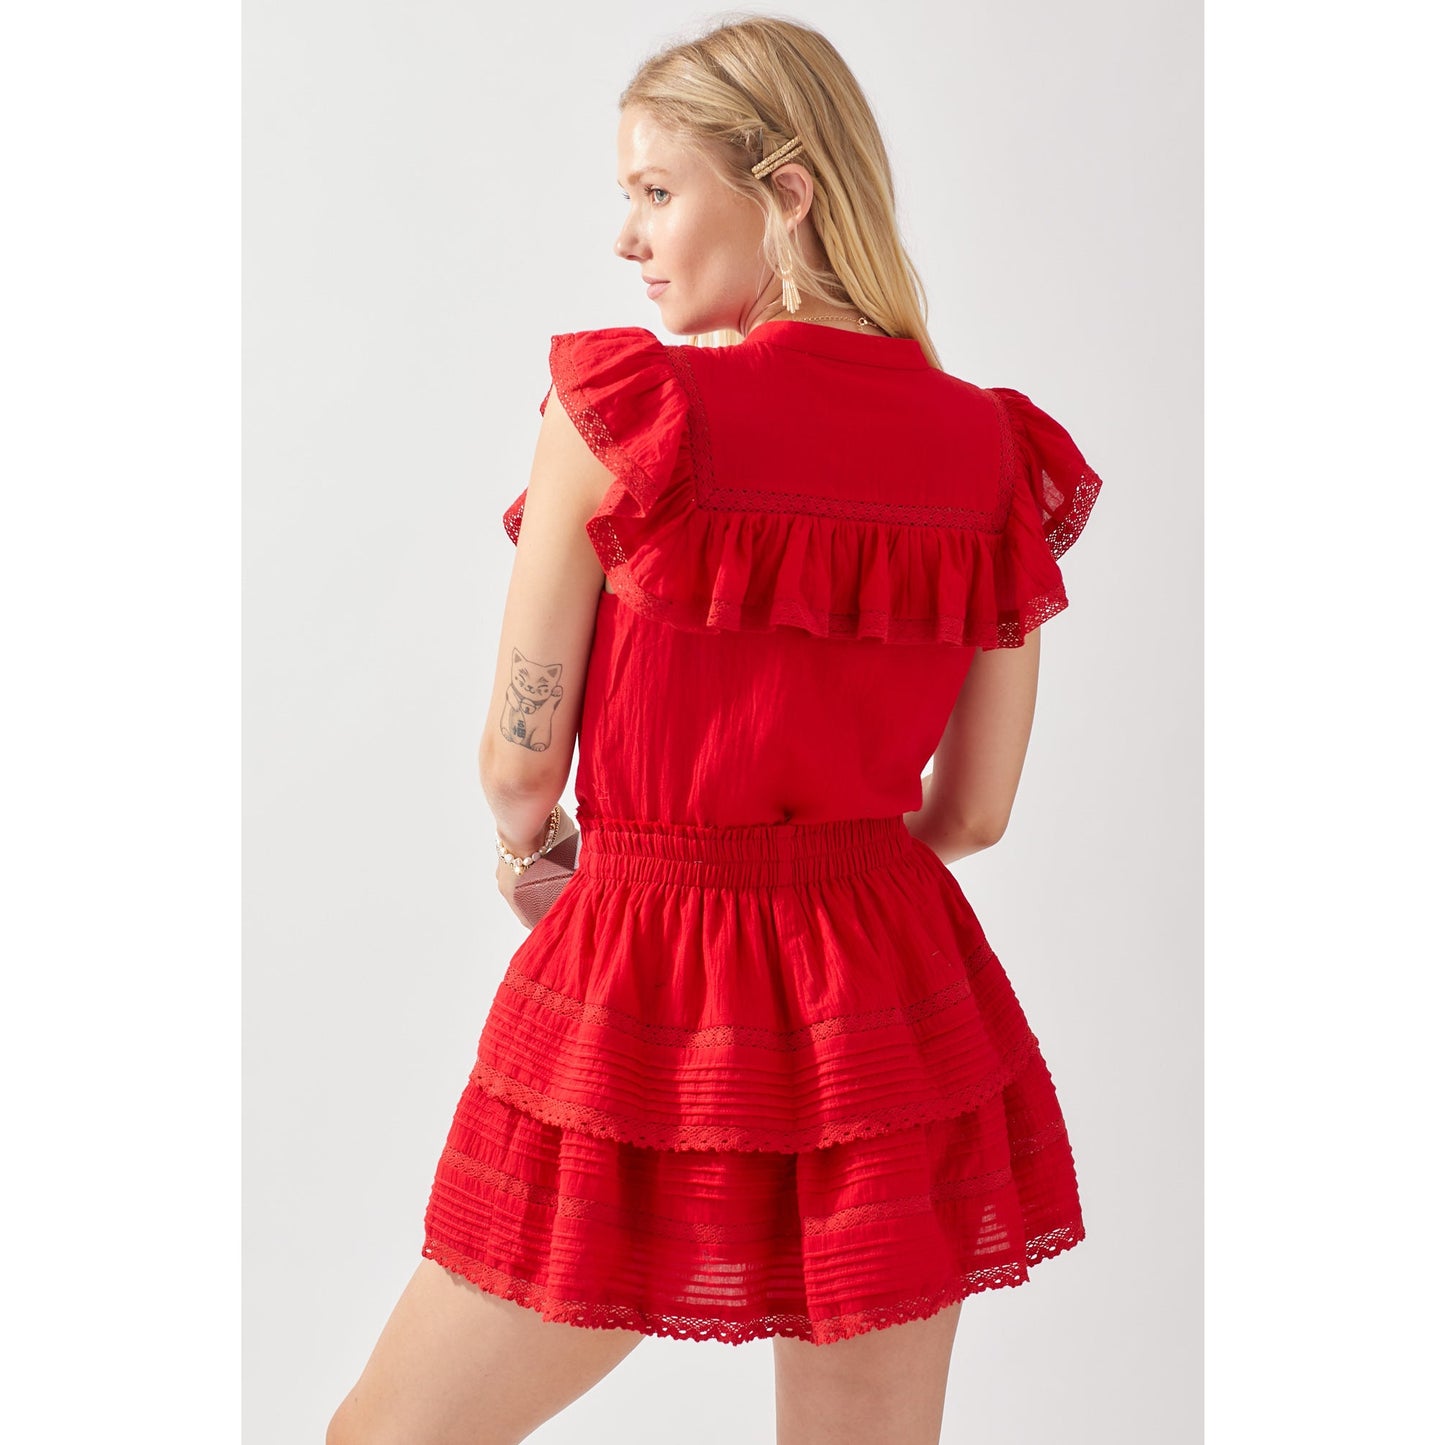 The Love Lace Ruffle Skirt Set